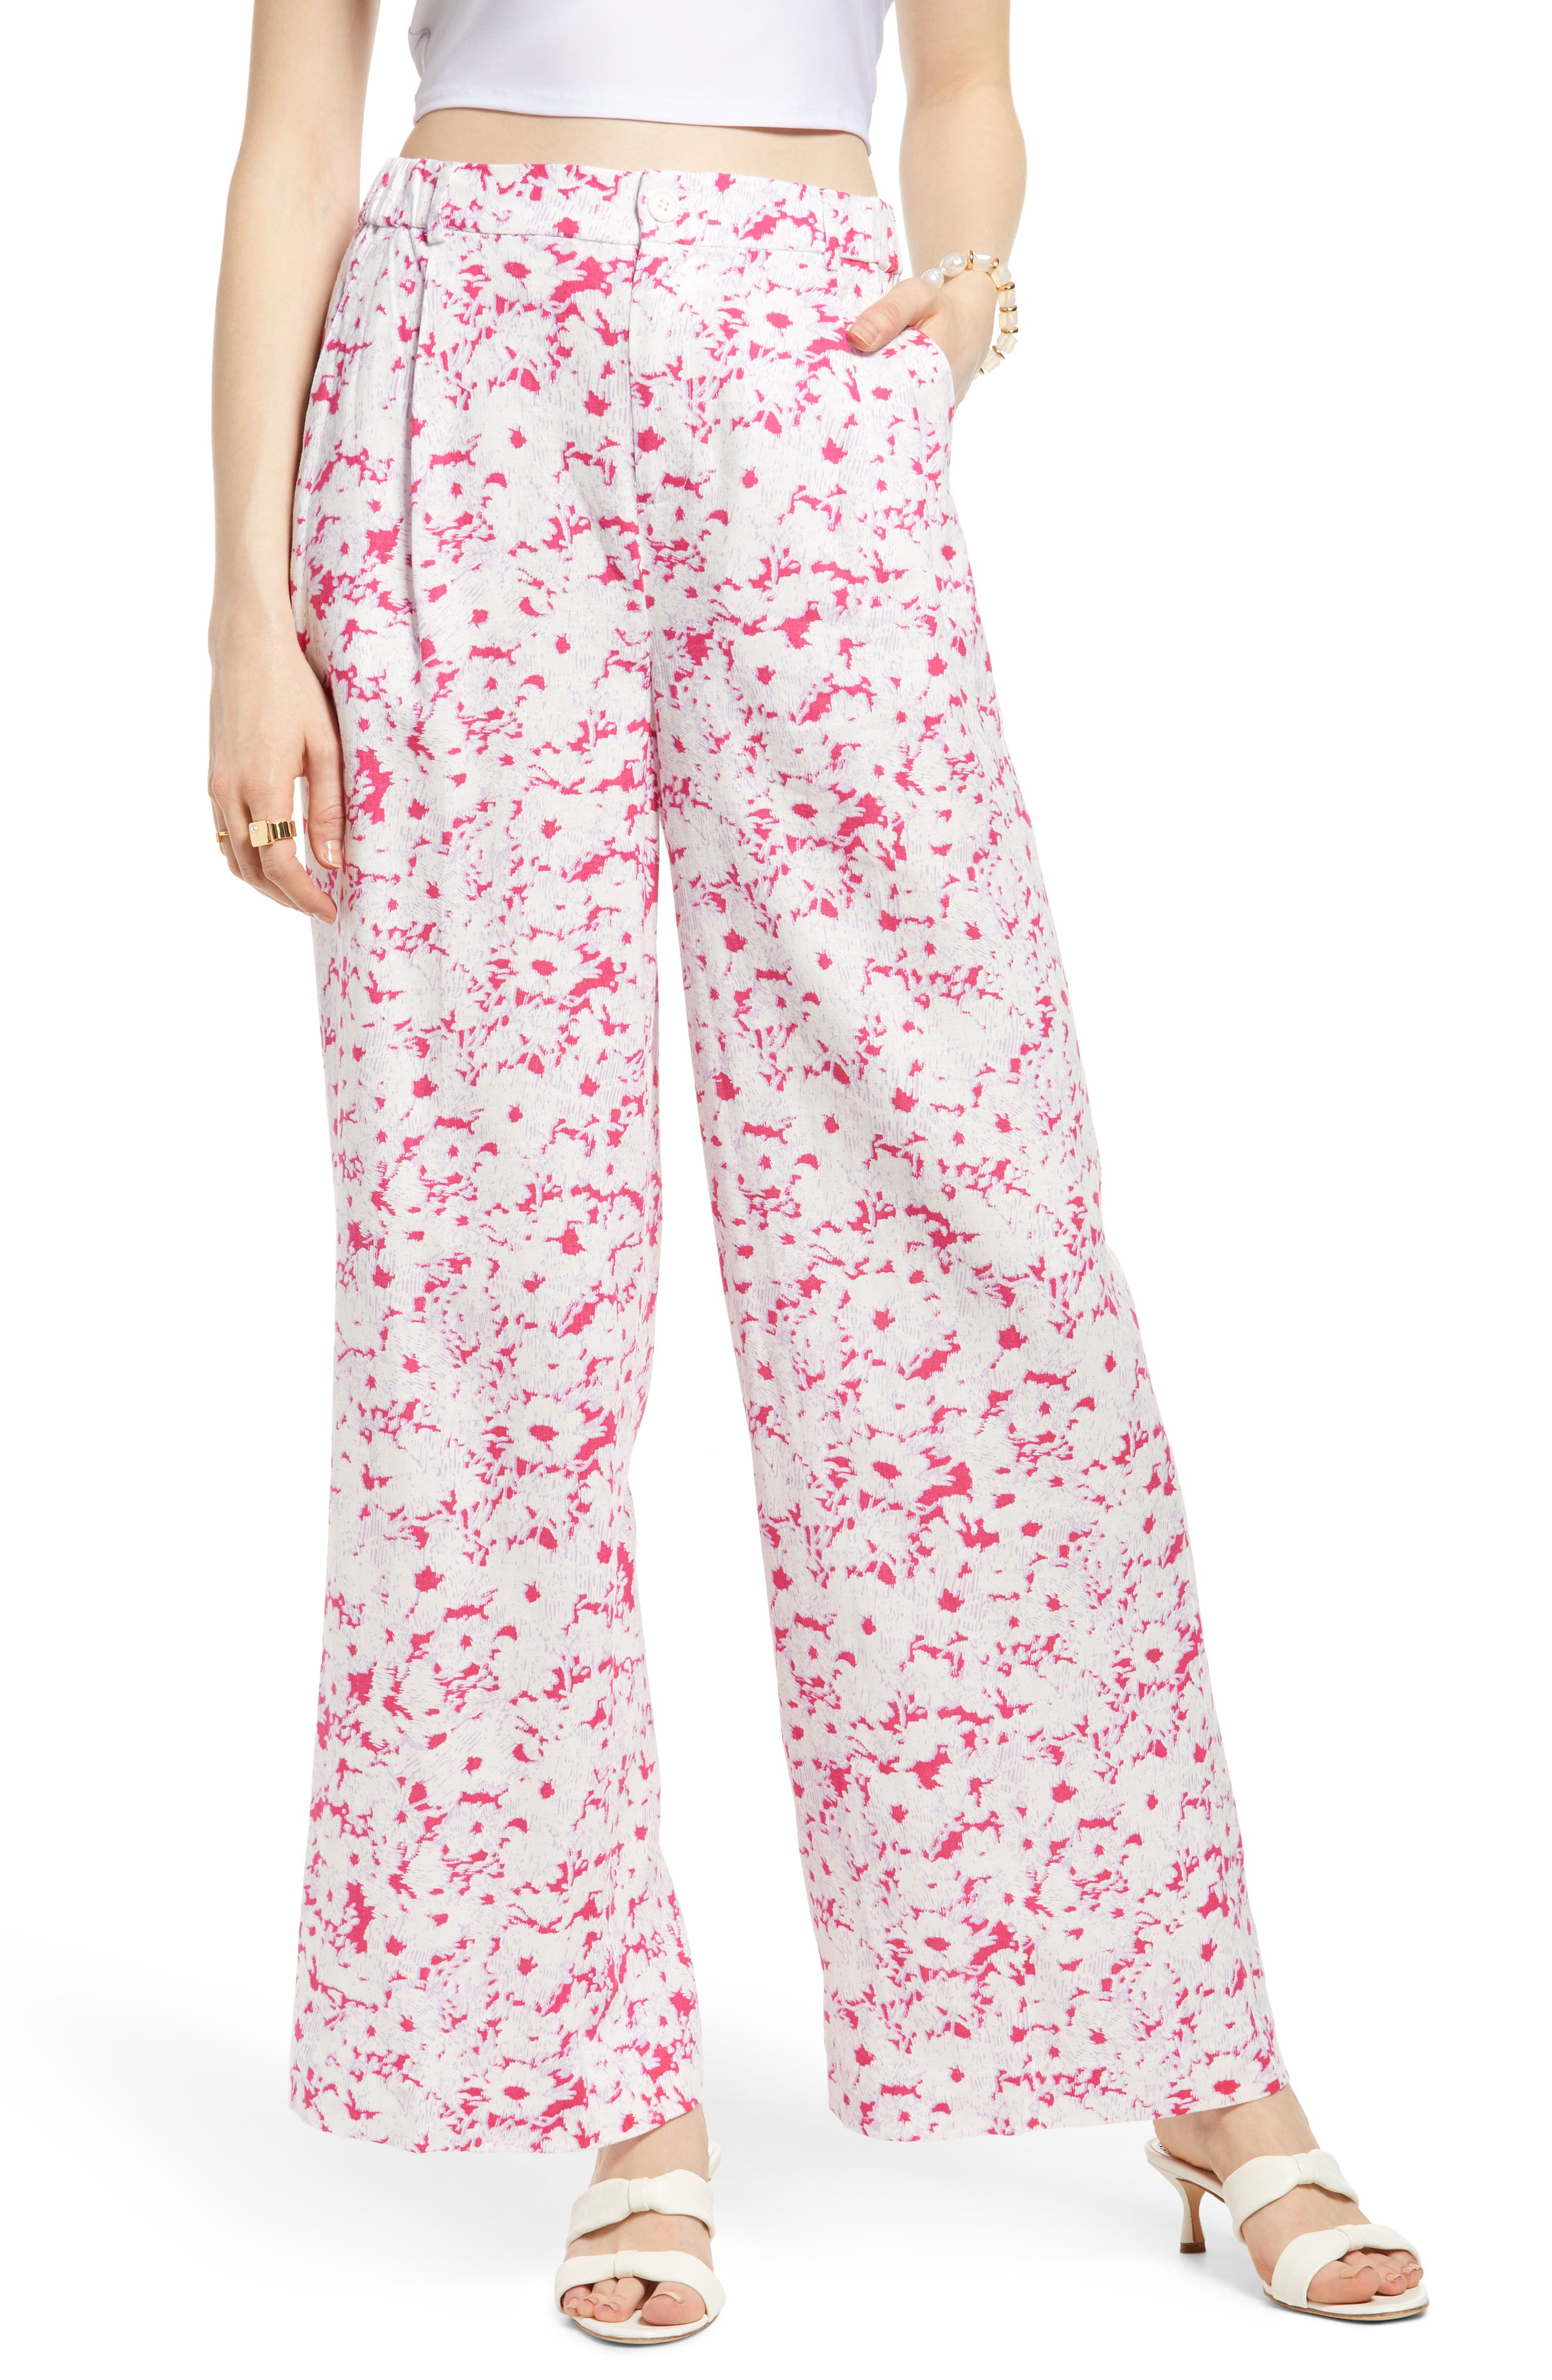 Ysoea Women's Satin Silk Pajama Pants High Waist Yoga Pants Casual Wide Leg Pj Bottoms Drawstring Palazzo Lounge Pants 